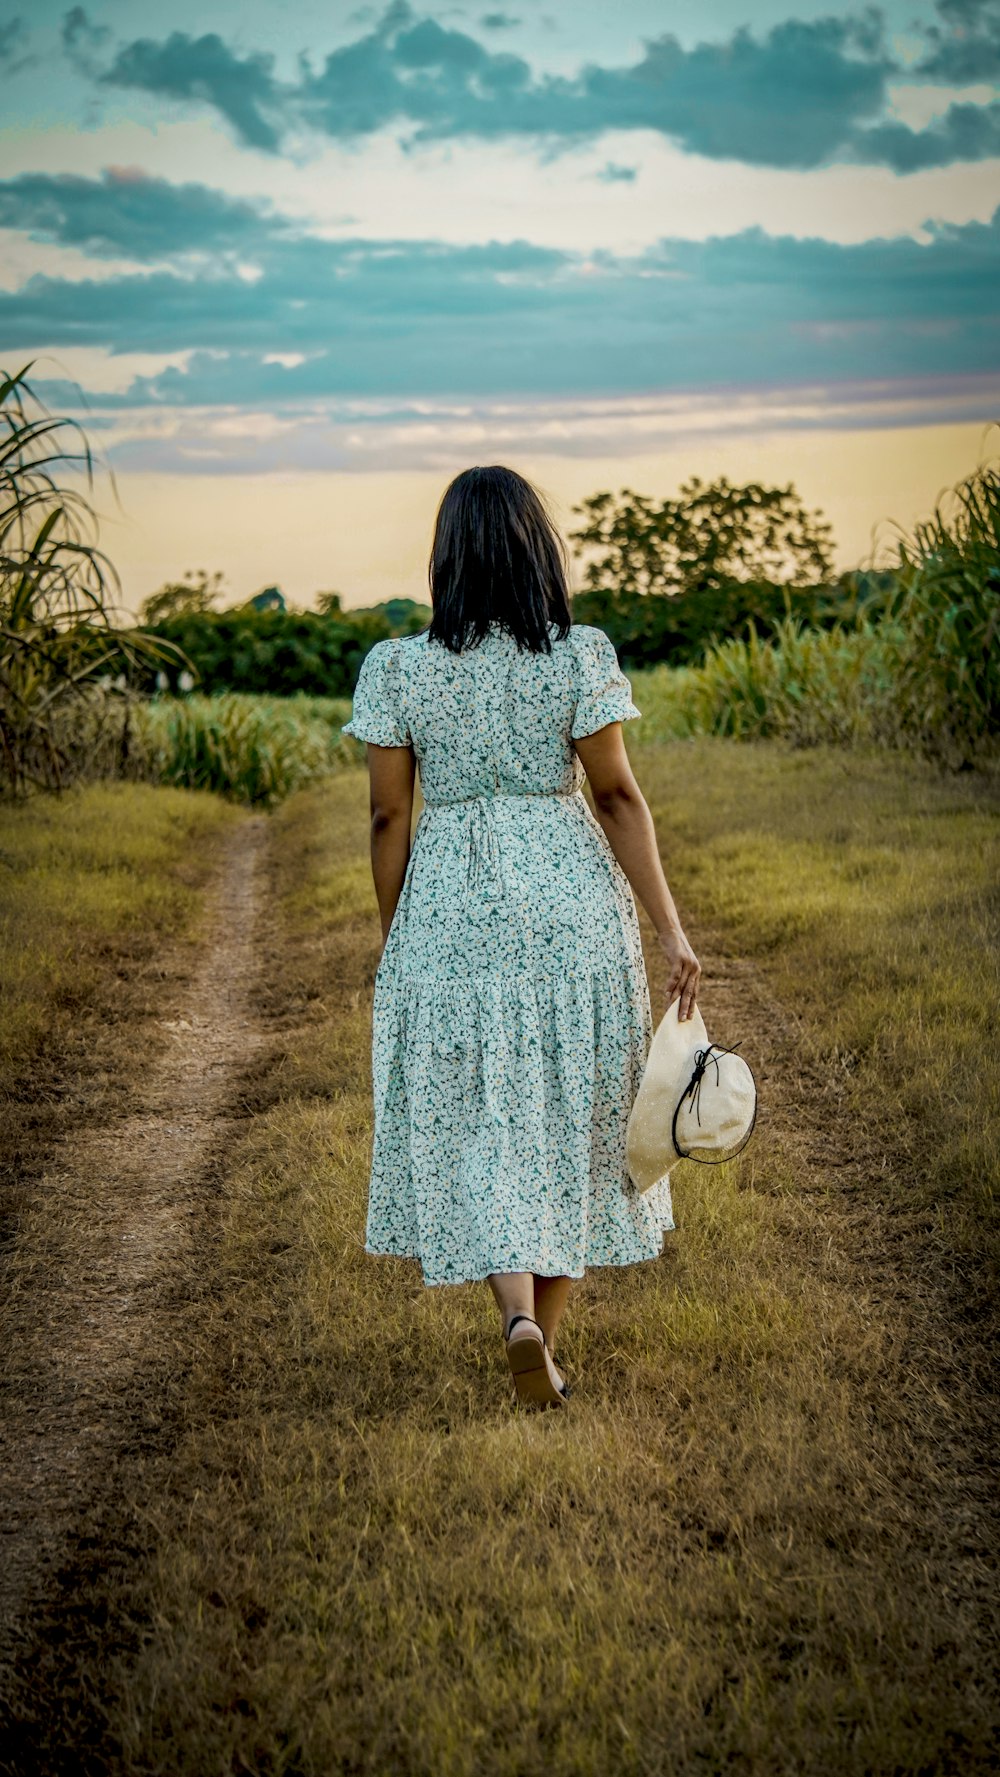 a woman in a dress walking down a dirt road